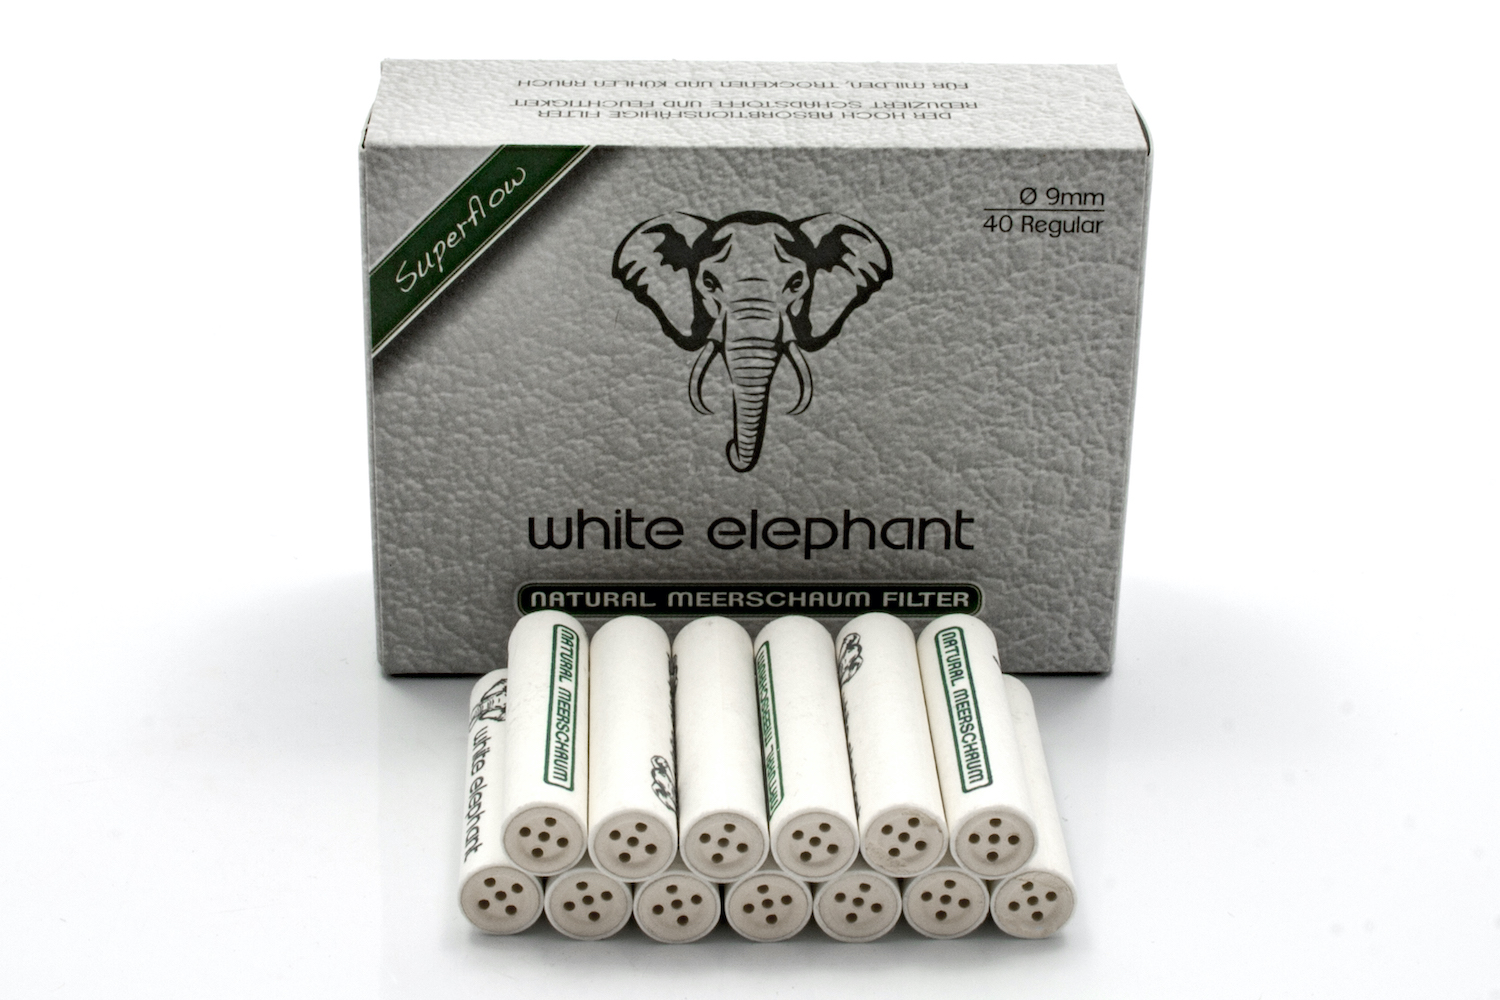 Filtry fajkowe White Elephant 05027 (640050) pianką morską/ceramica 9 mm, 40 szt./op.